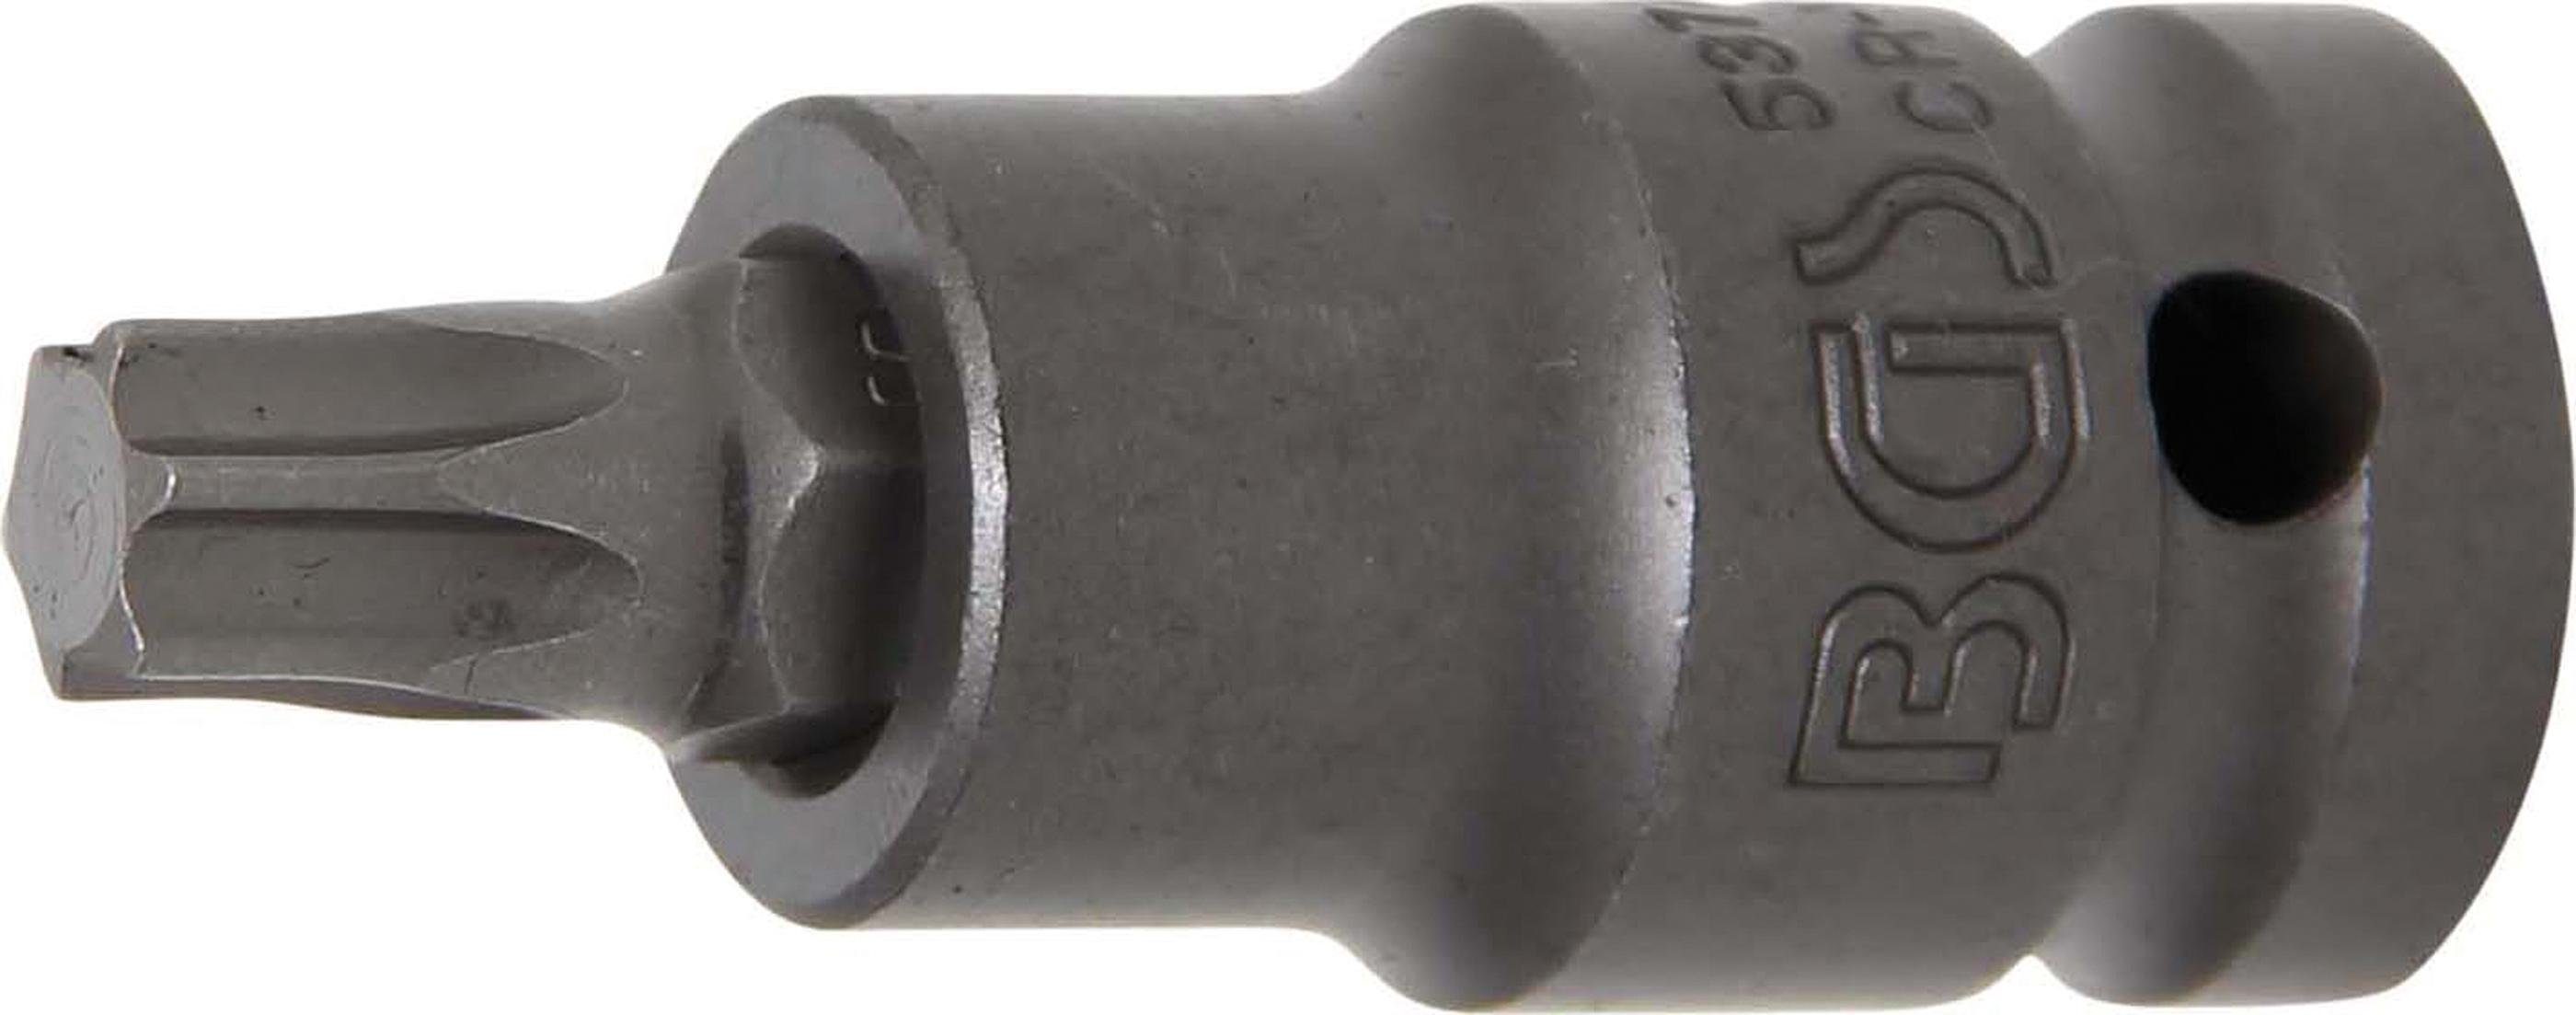 BGS technic Bit-Schraubendreher Kraft-Bit-Einsatz, Antrieb Innenvierkant 12,5 mm (1/2), T-Profil (für Torx) T50